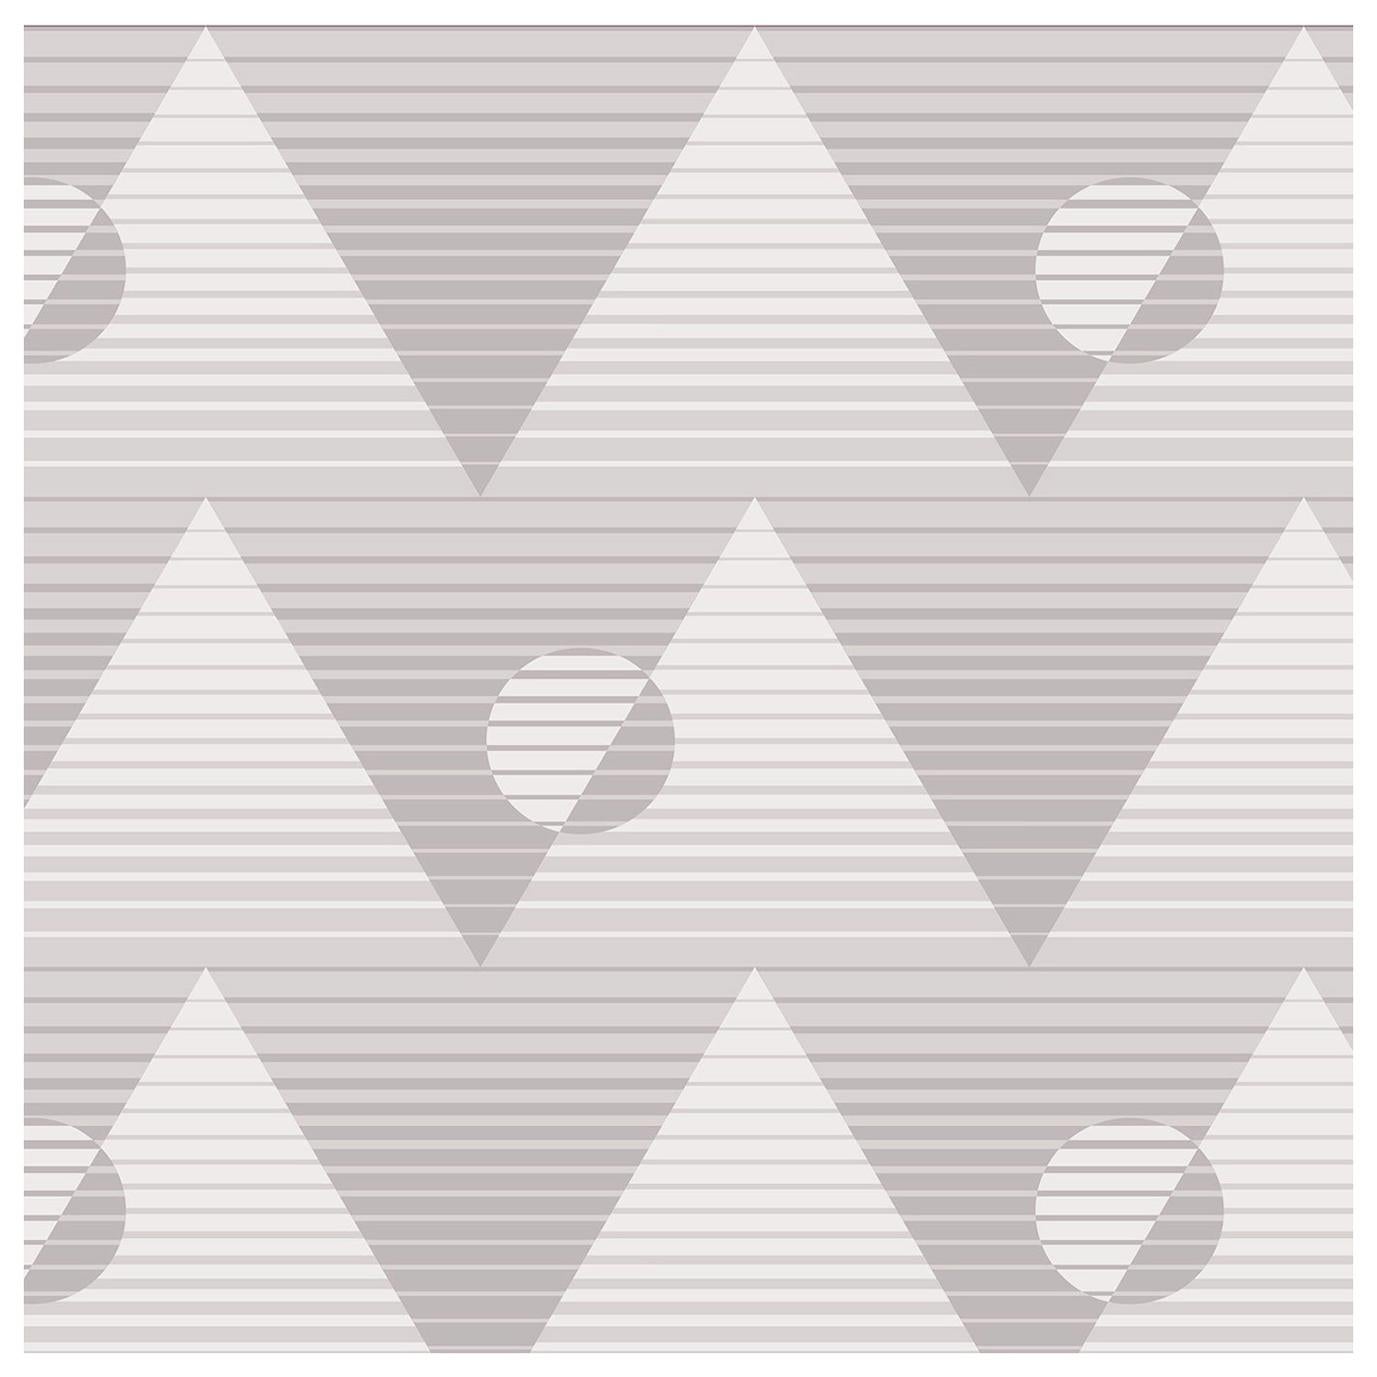 Pyramide du Soleil Designer Wallpaper in Granite 'Warm Grays'